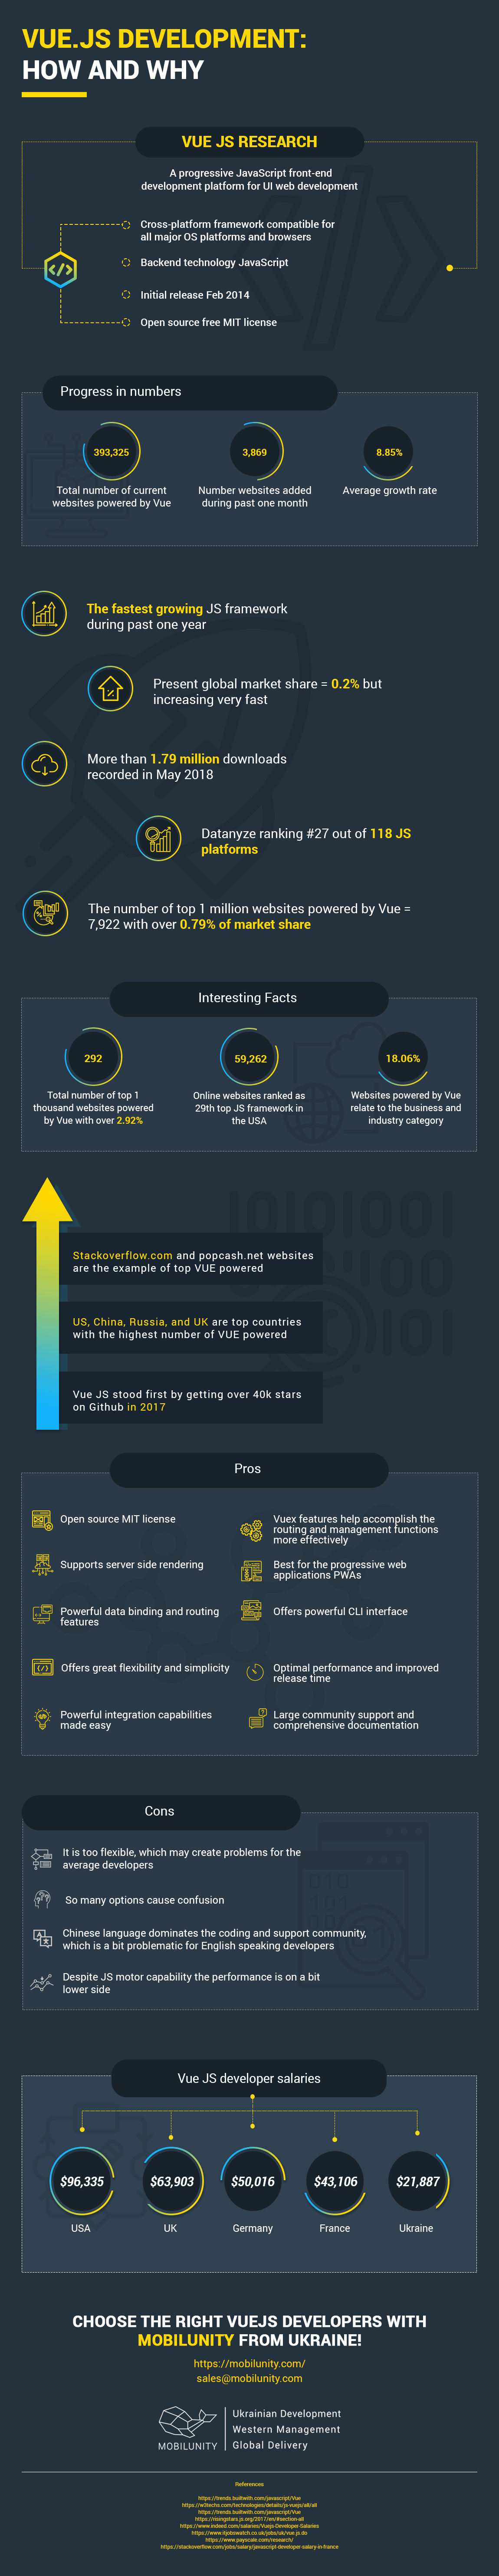 vue.js development company infographic